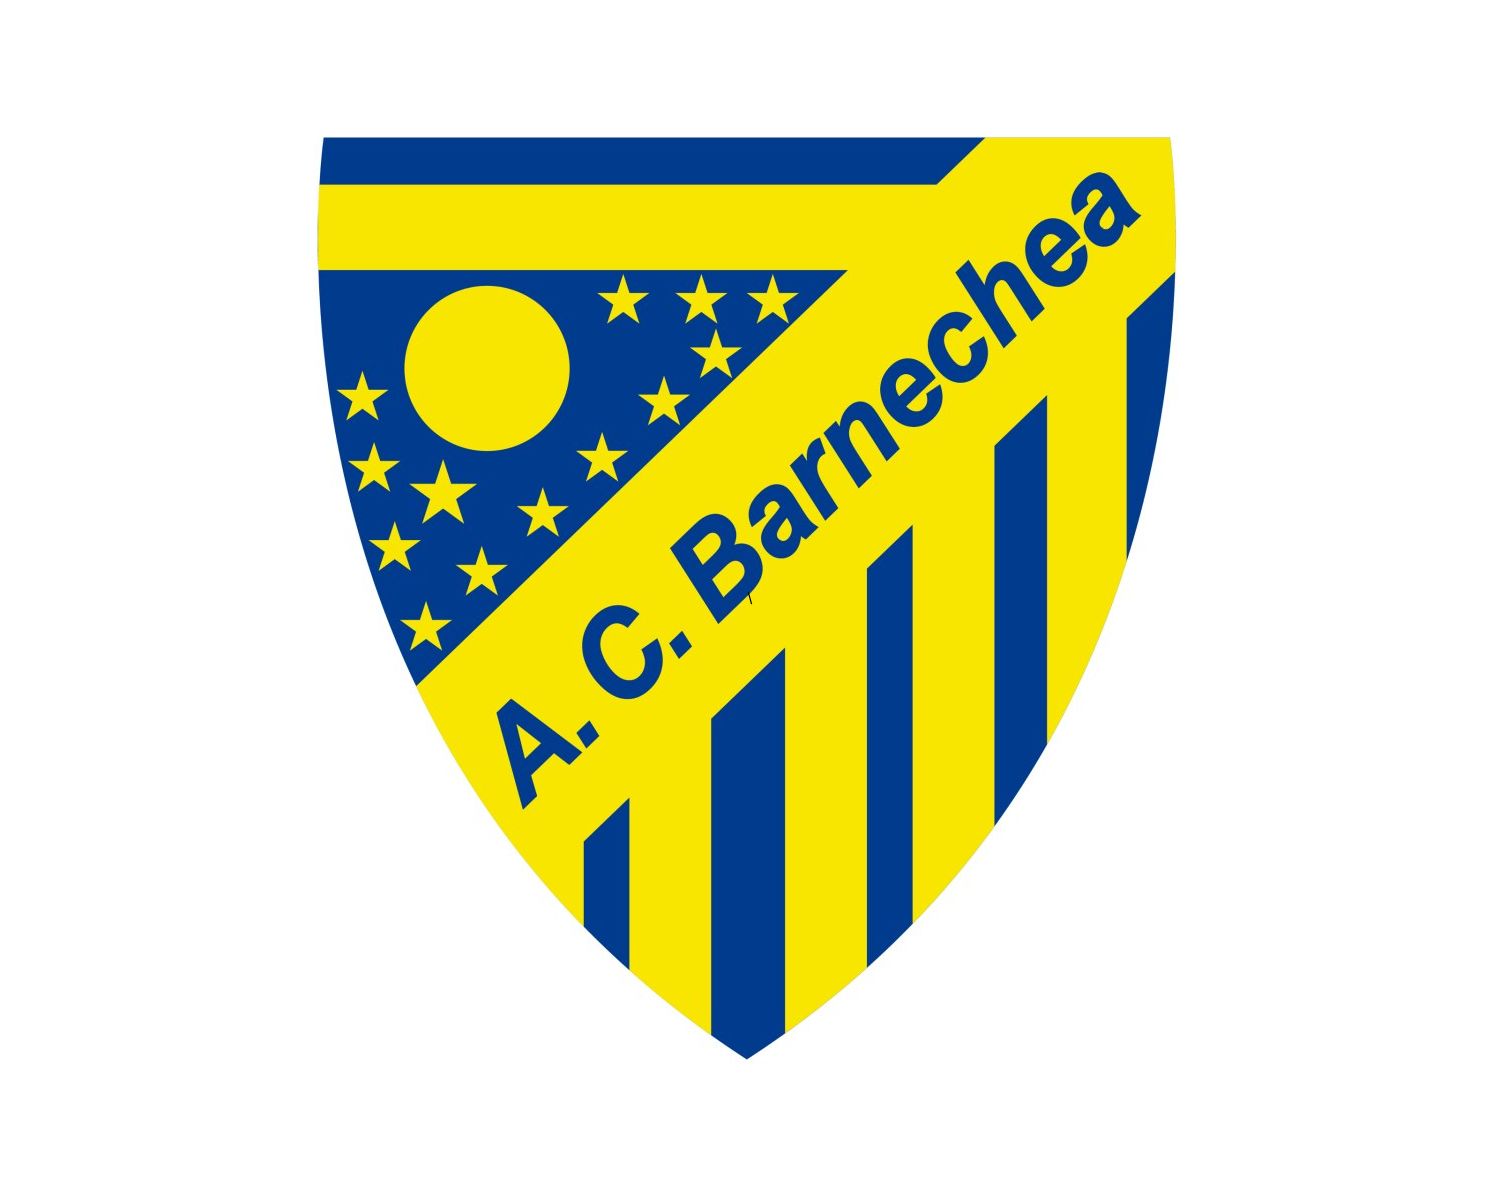 ac-barnechea-16-football-club-facts